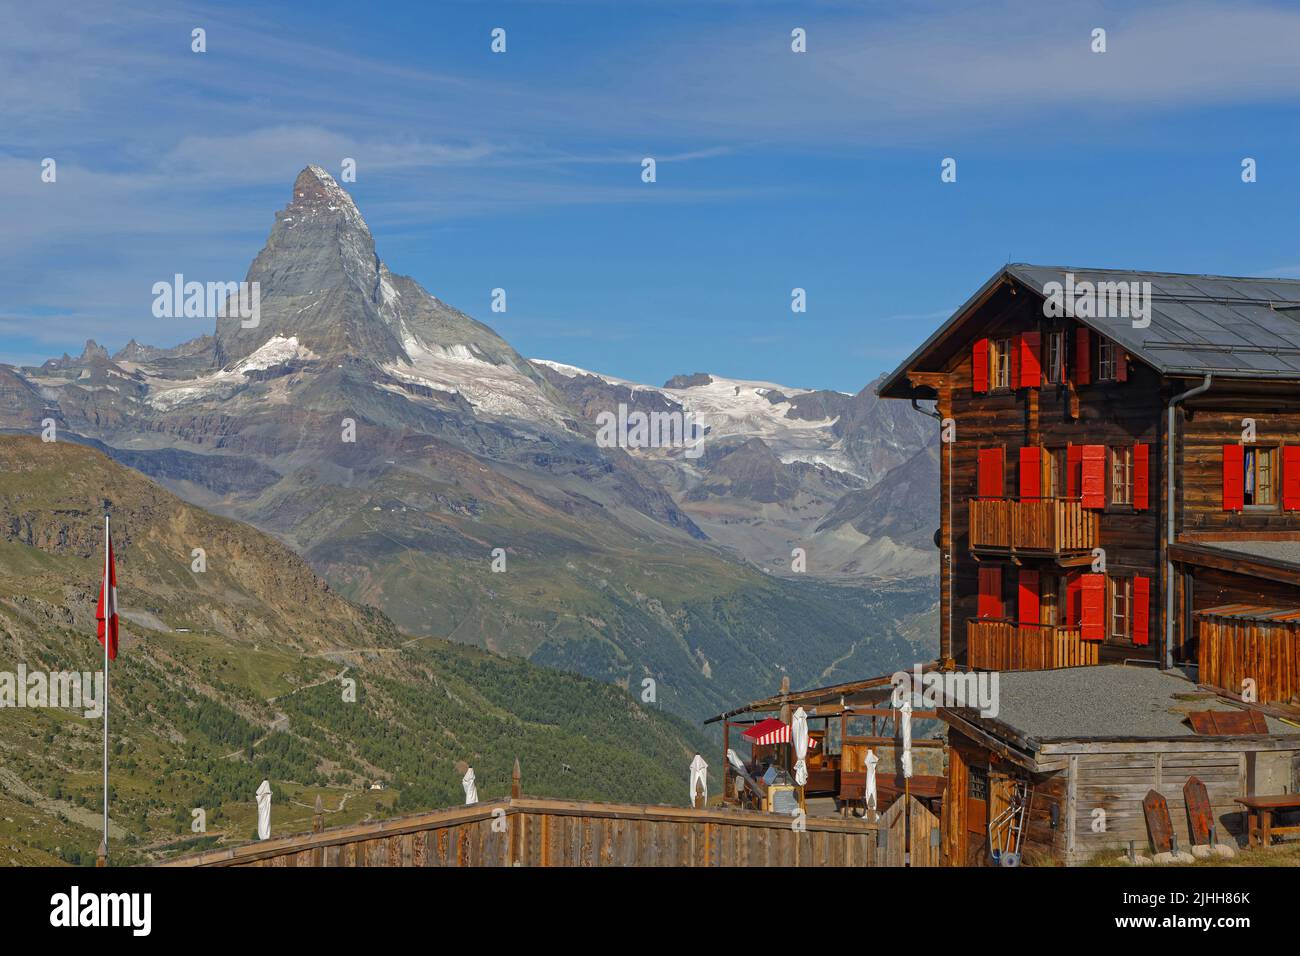 ZERMATT, SWITZERLAND, July 13, 2022 : Fluhalp refuge and Matterhorn summit. Zermatt is famed as a mountaineering and ski resort of the Swiss Alps. Stock Photo